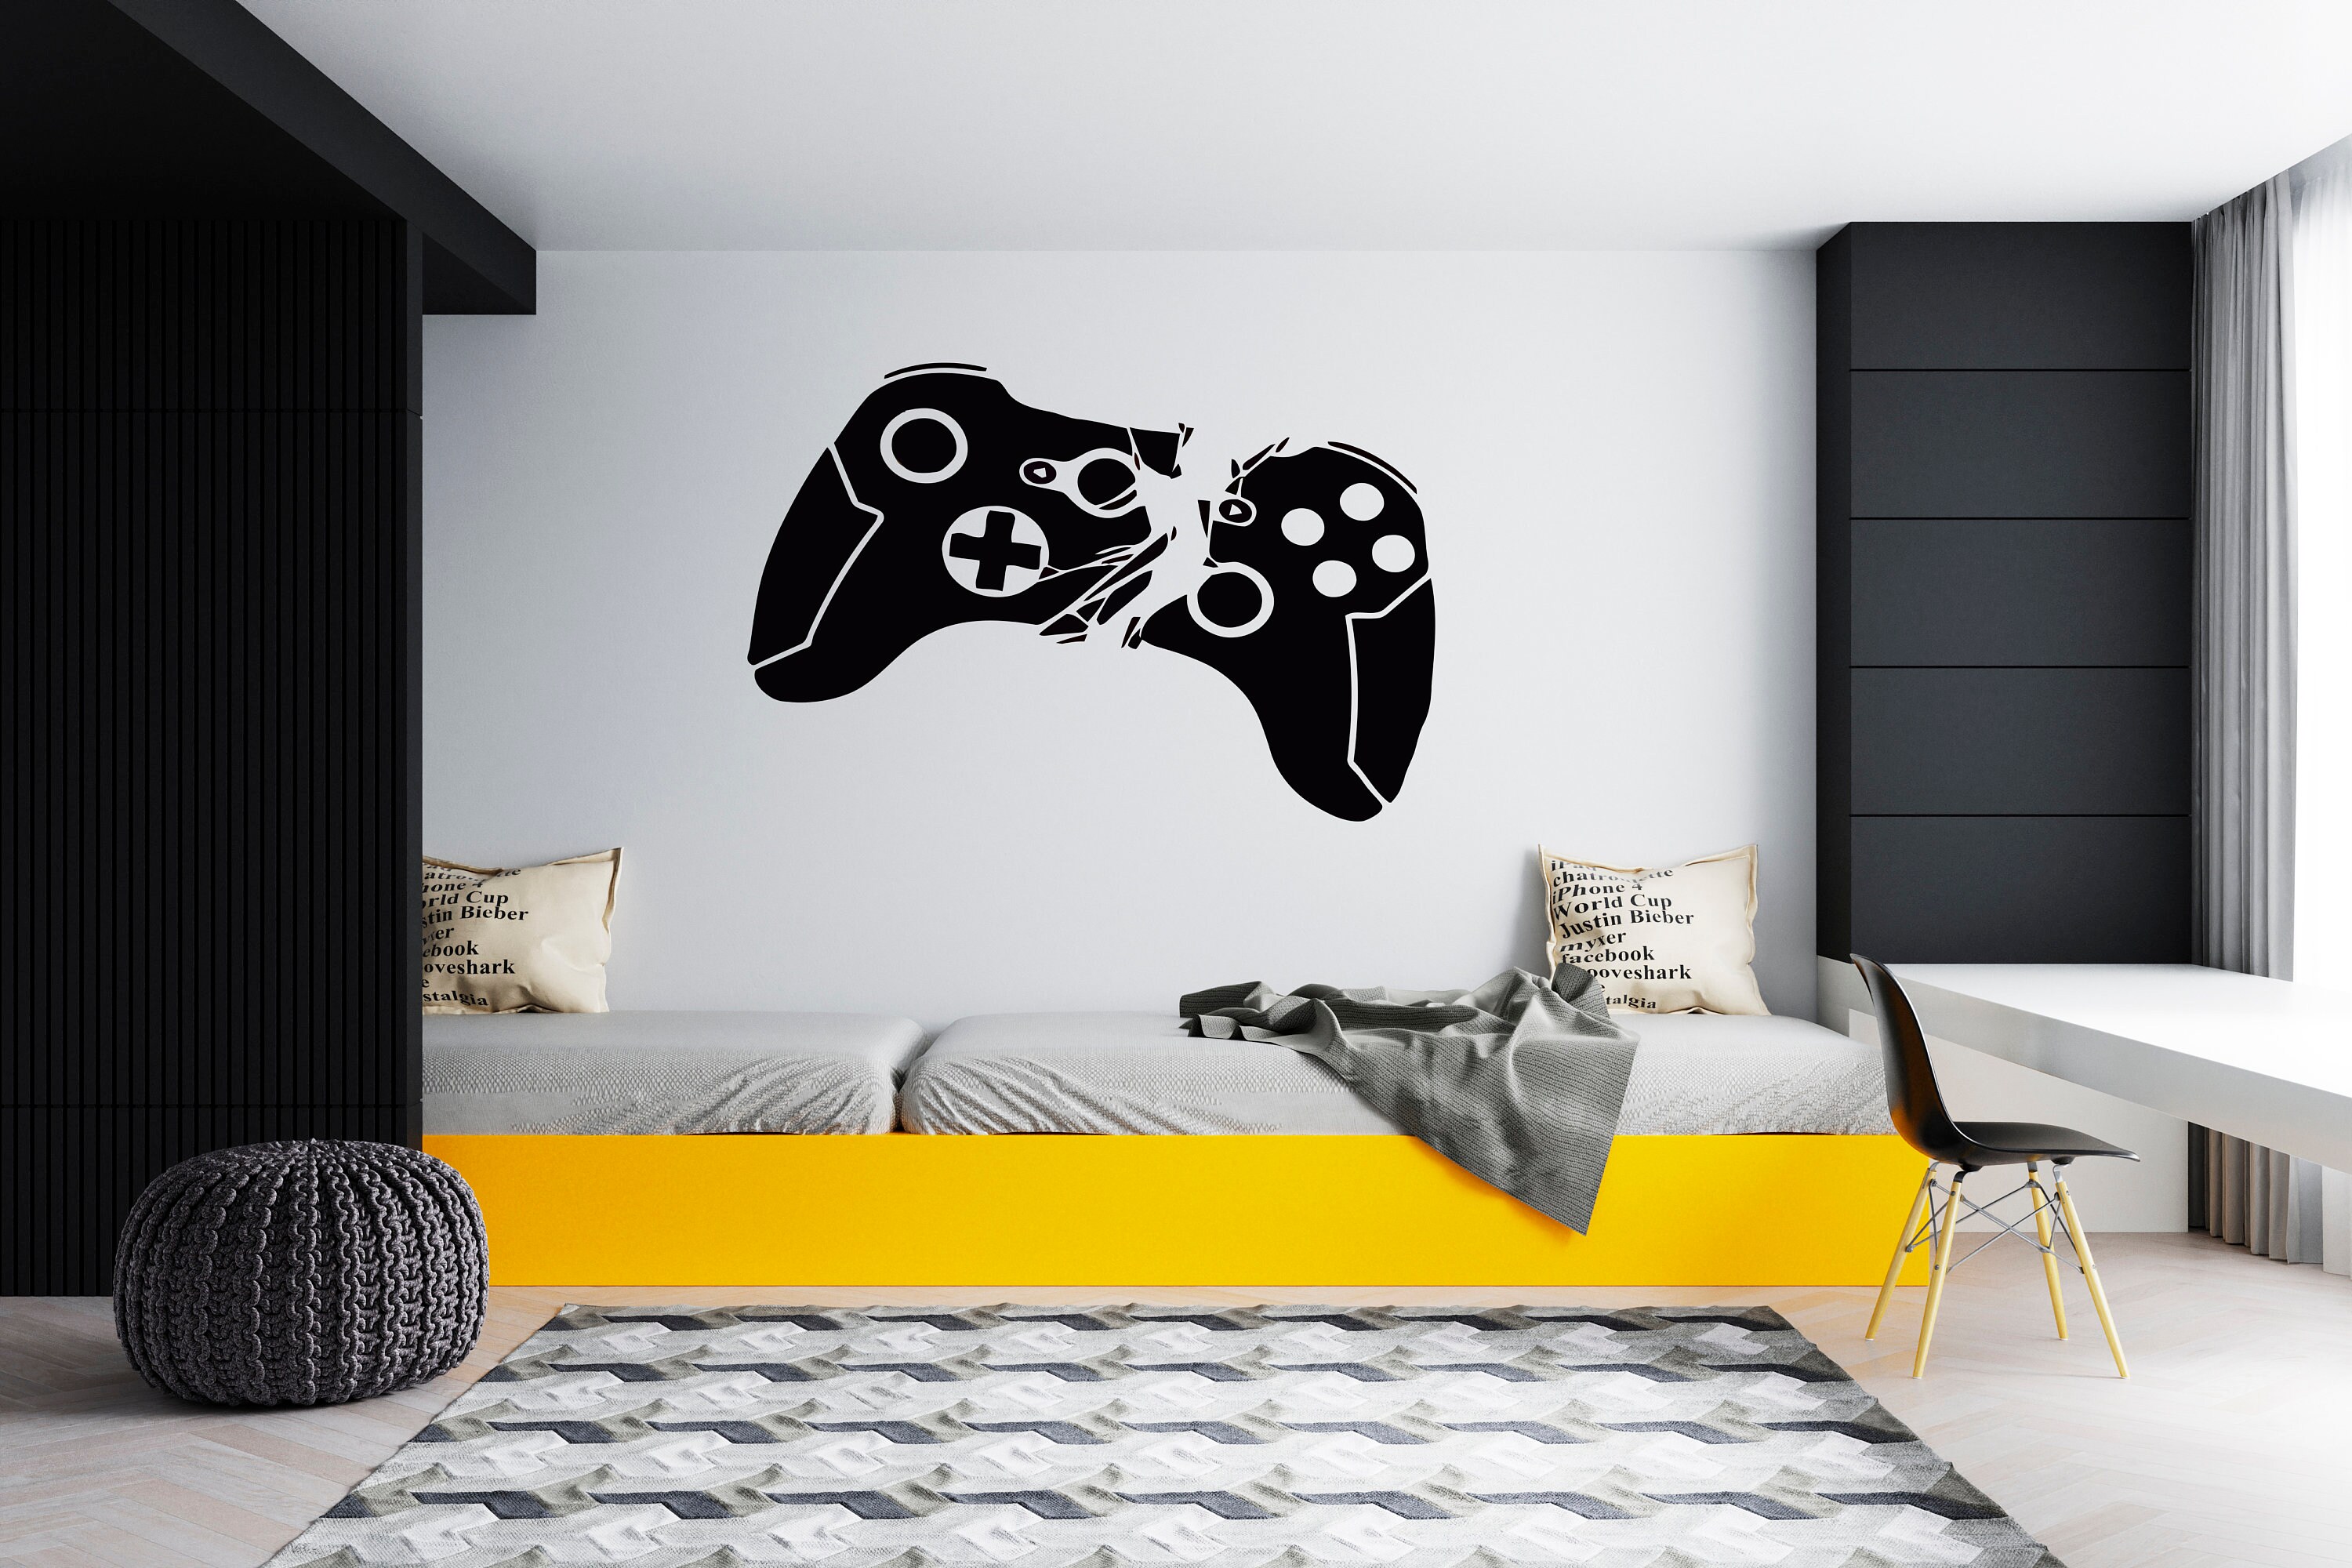 Vinyl Wall Decal Gamer Video Games Joystick Gaming Playroom